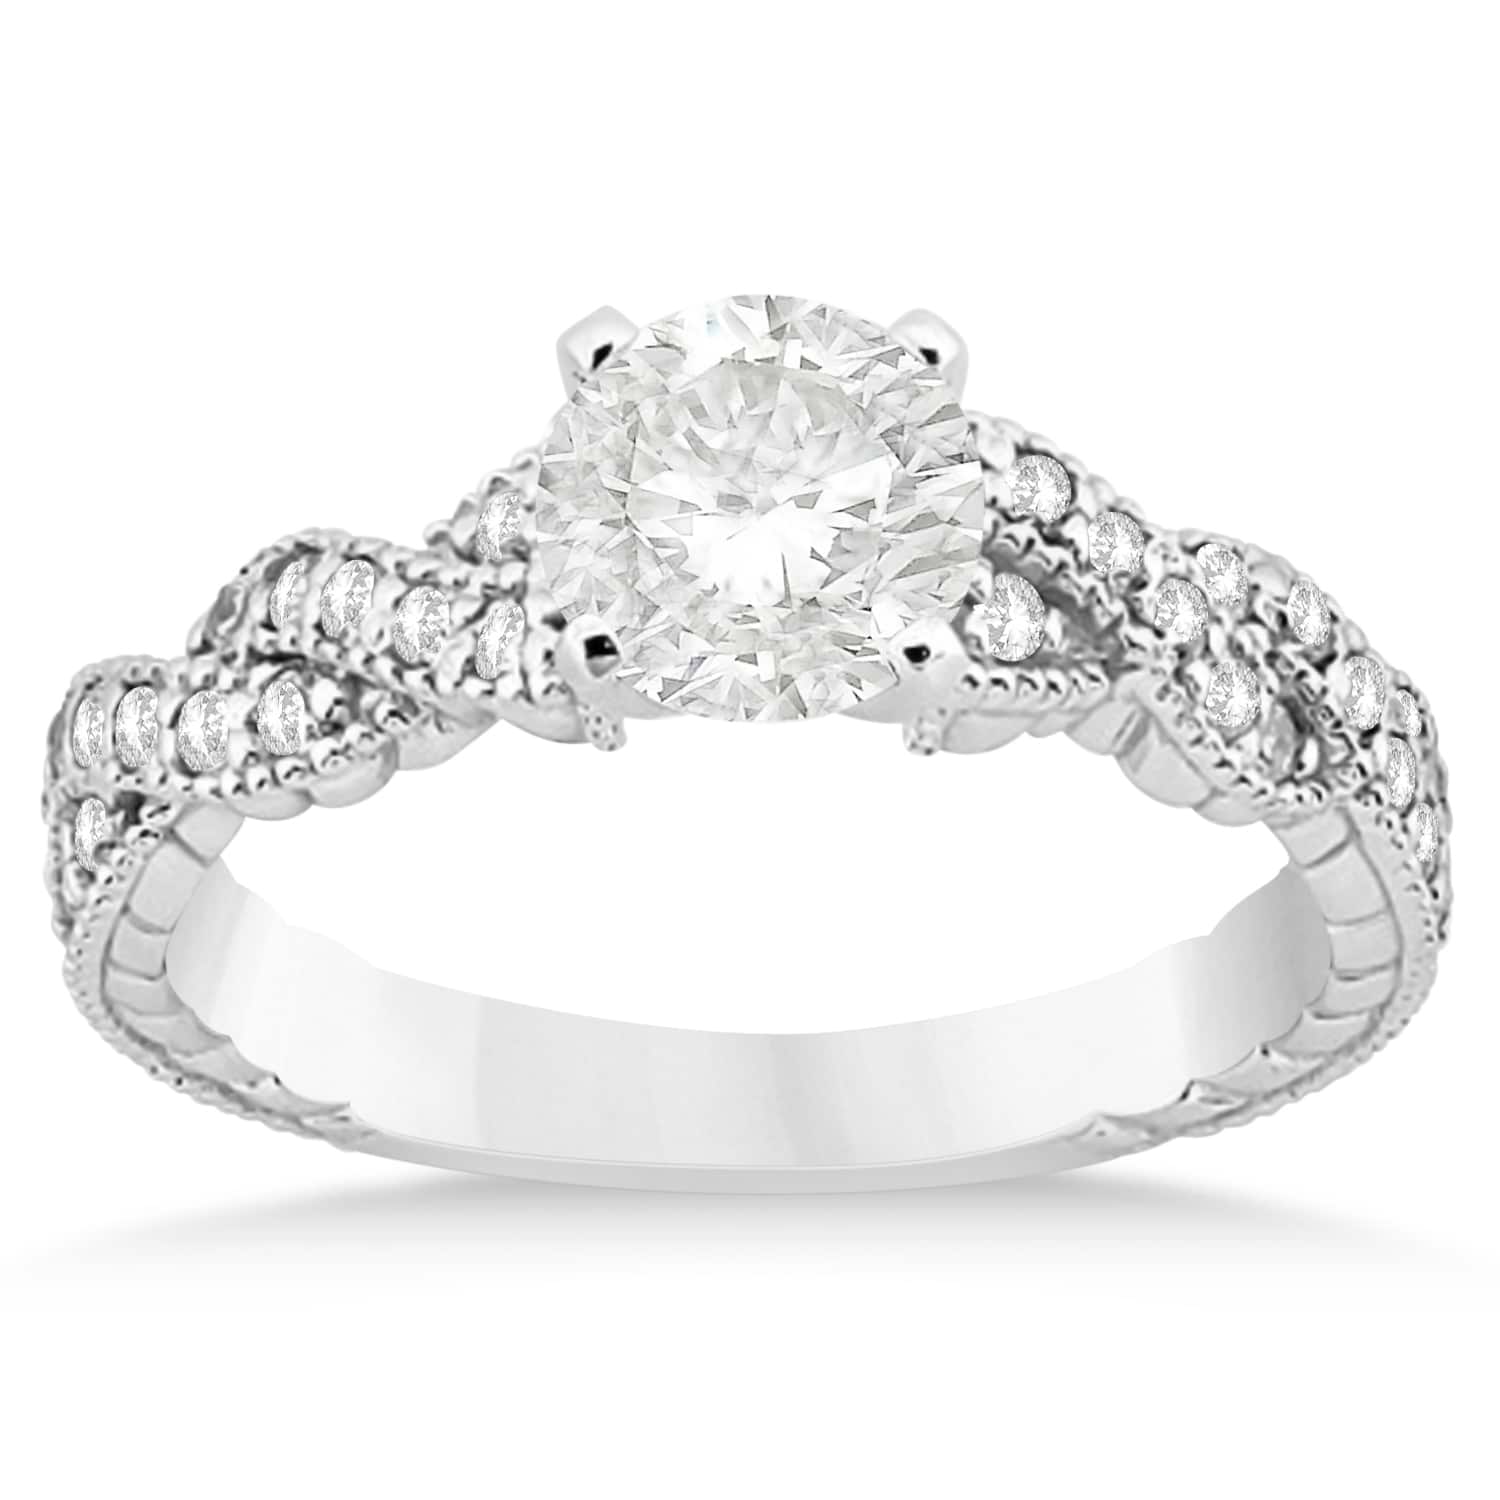 Diamond Braided Engagement Ring Setting 14k White Gold (0.21ct)